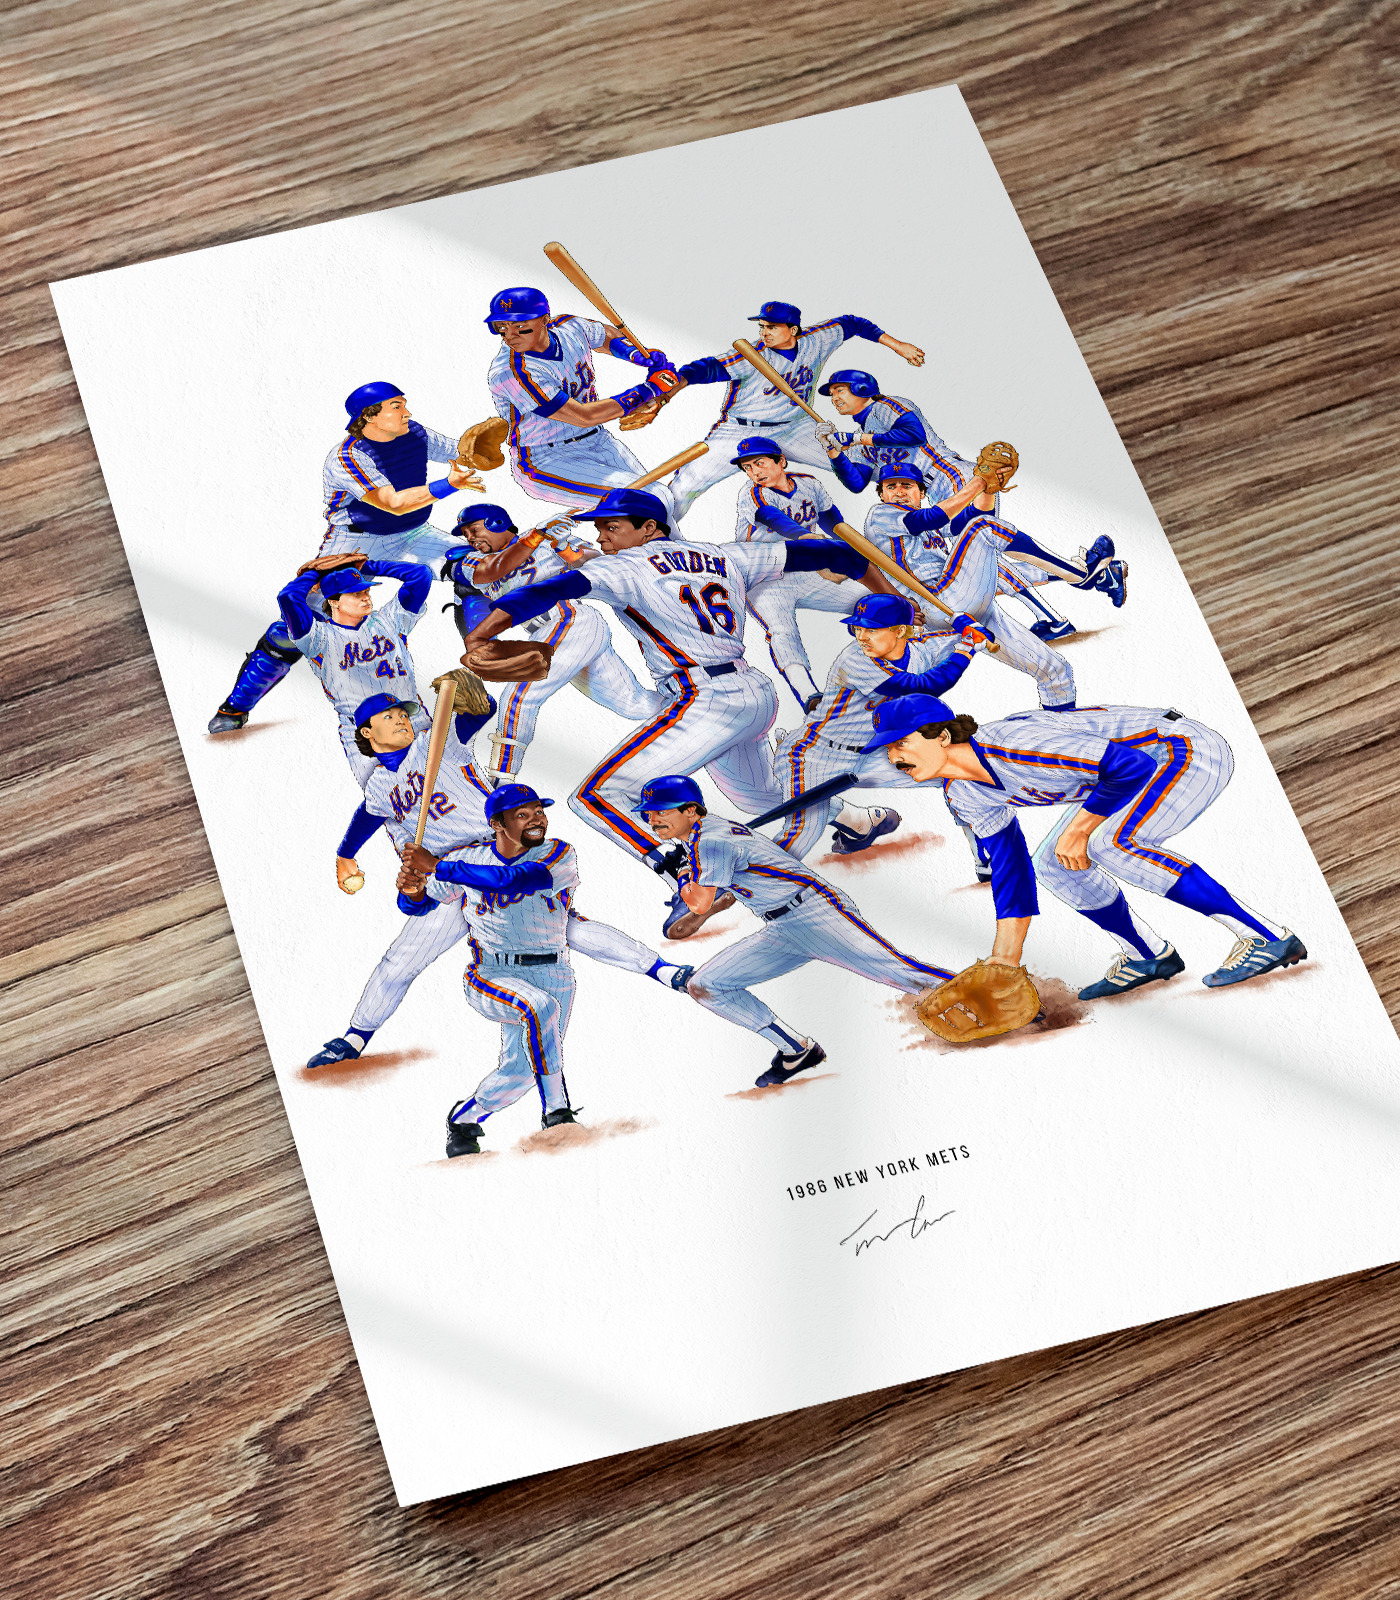 1986 New York Mets World Series Collage Poster Baseball Illustrated Print Art